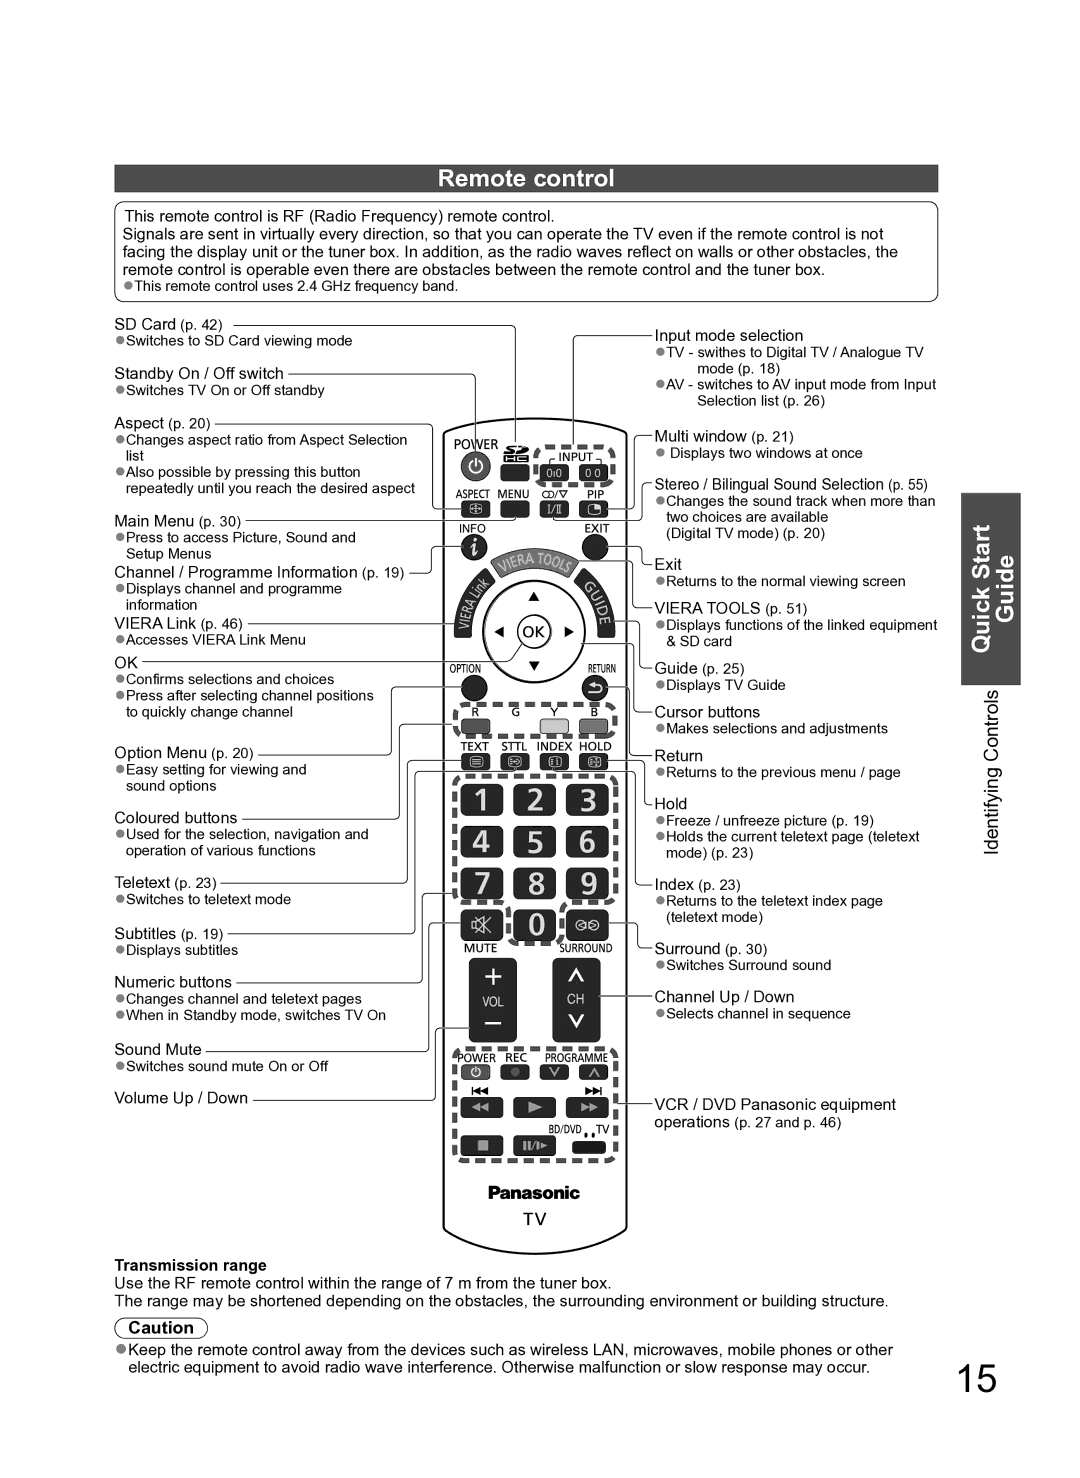 Panasonic TH-P54Z10H manual Remote control, Transmission range 